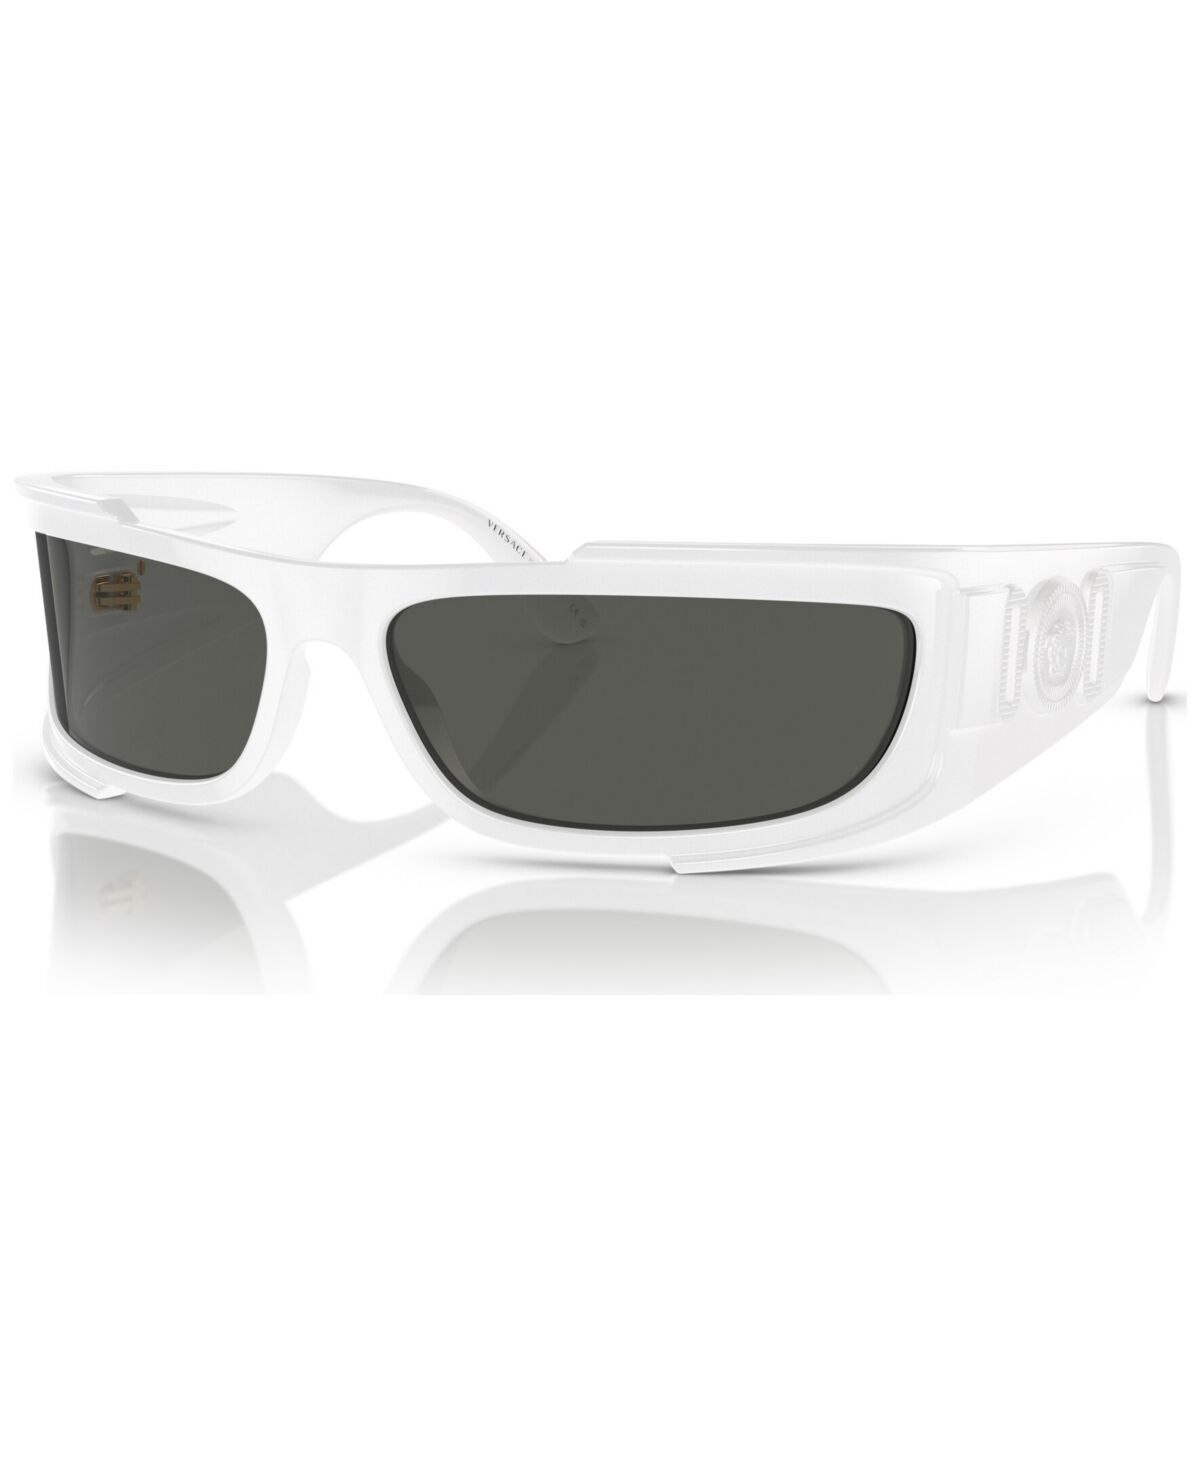 Versace Men's Sunglasses, VE4446 - White